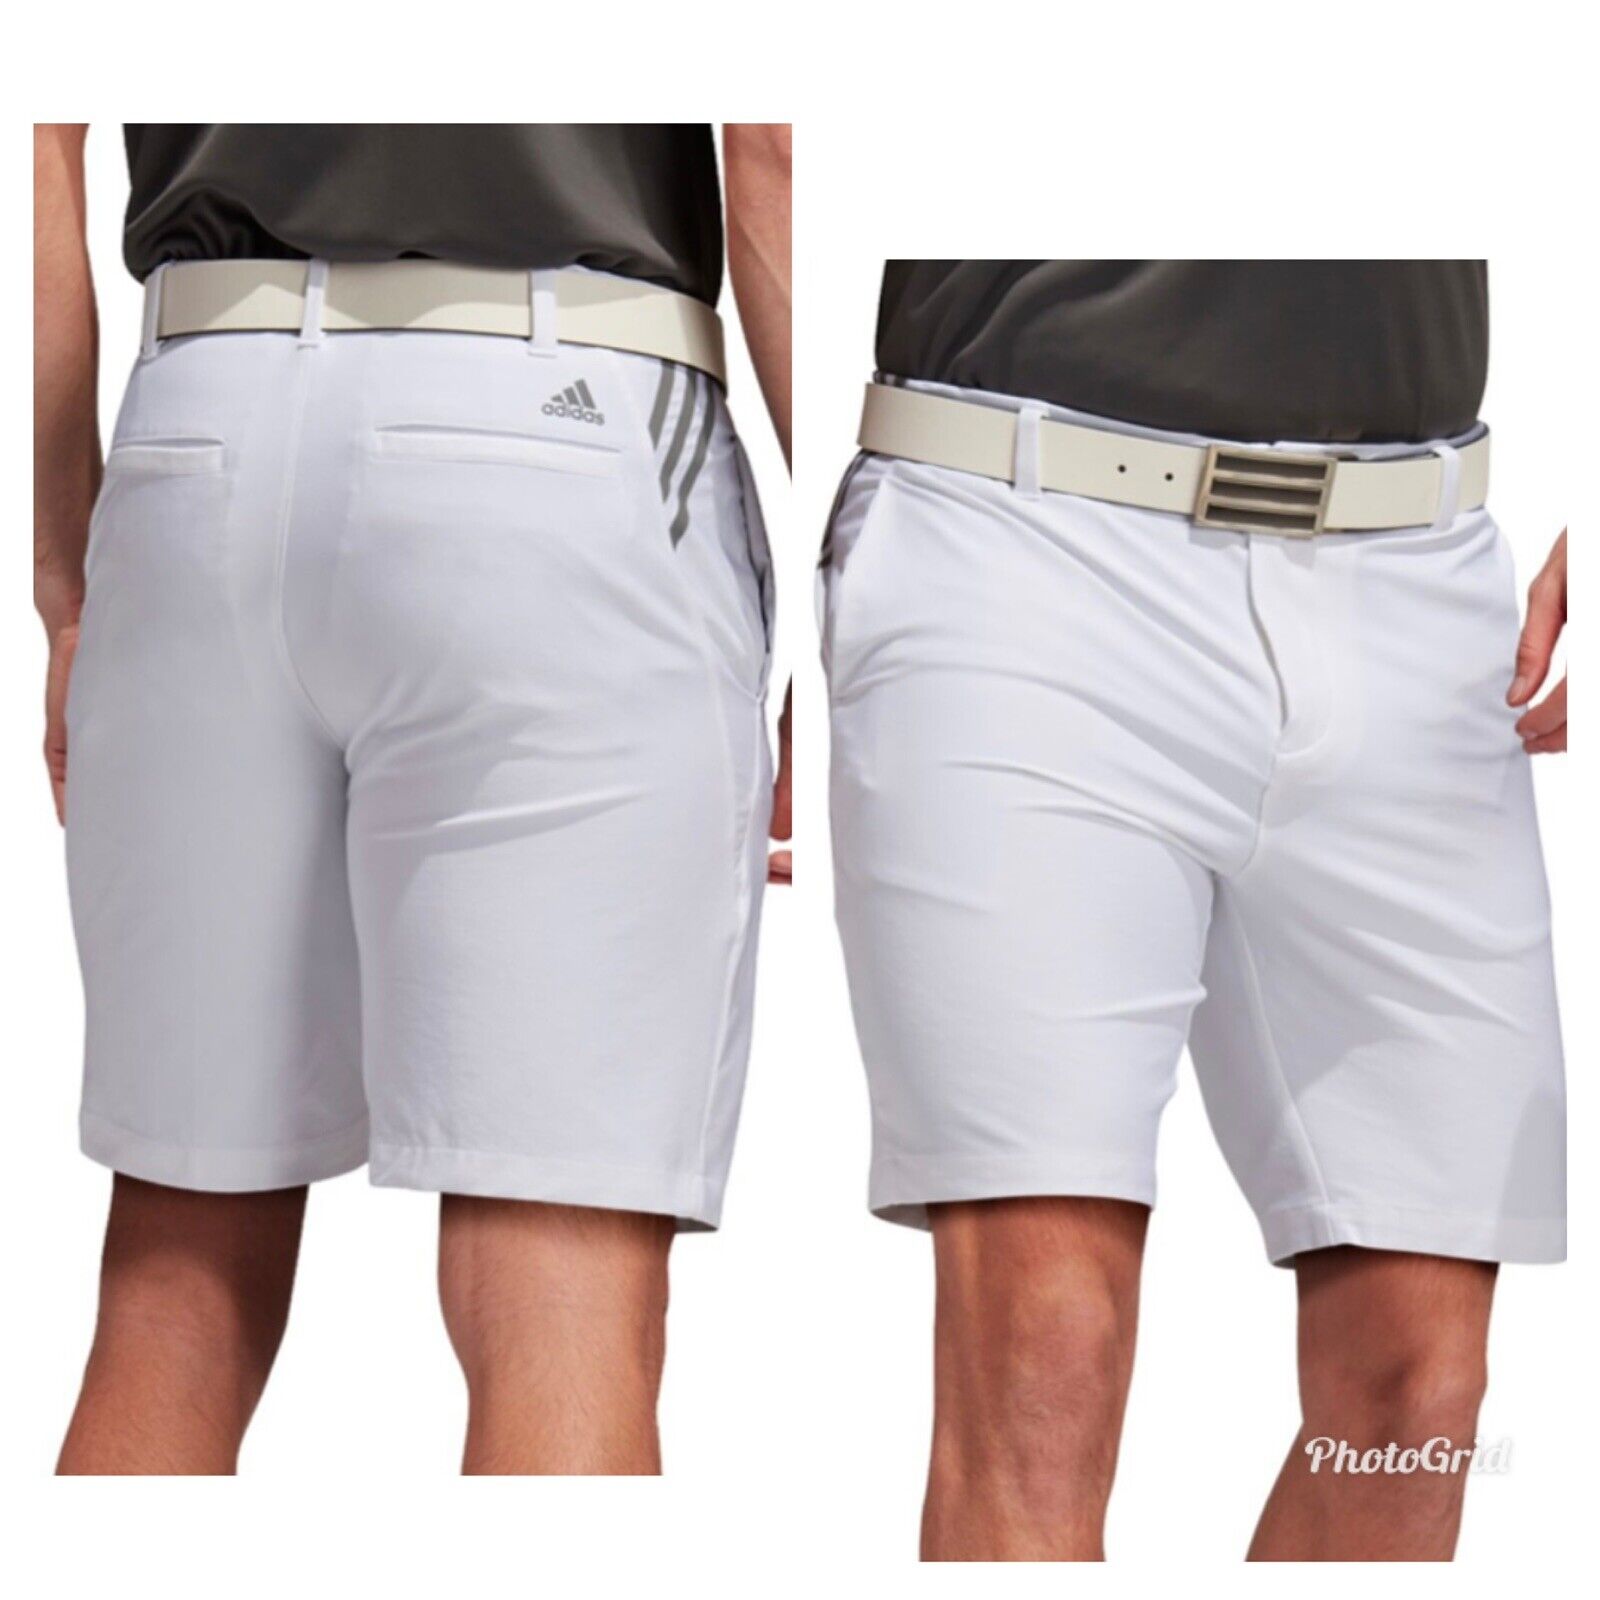 Adidas Golf Men's Standard Ultimate 3 Stripe  Shorts - White - Choose Size